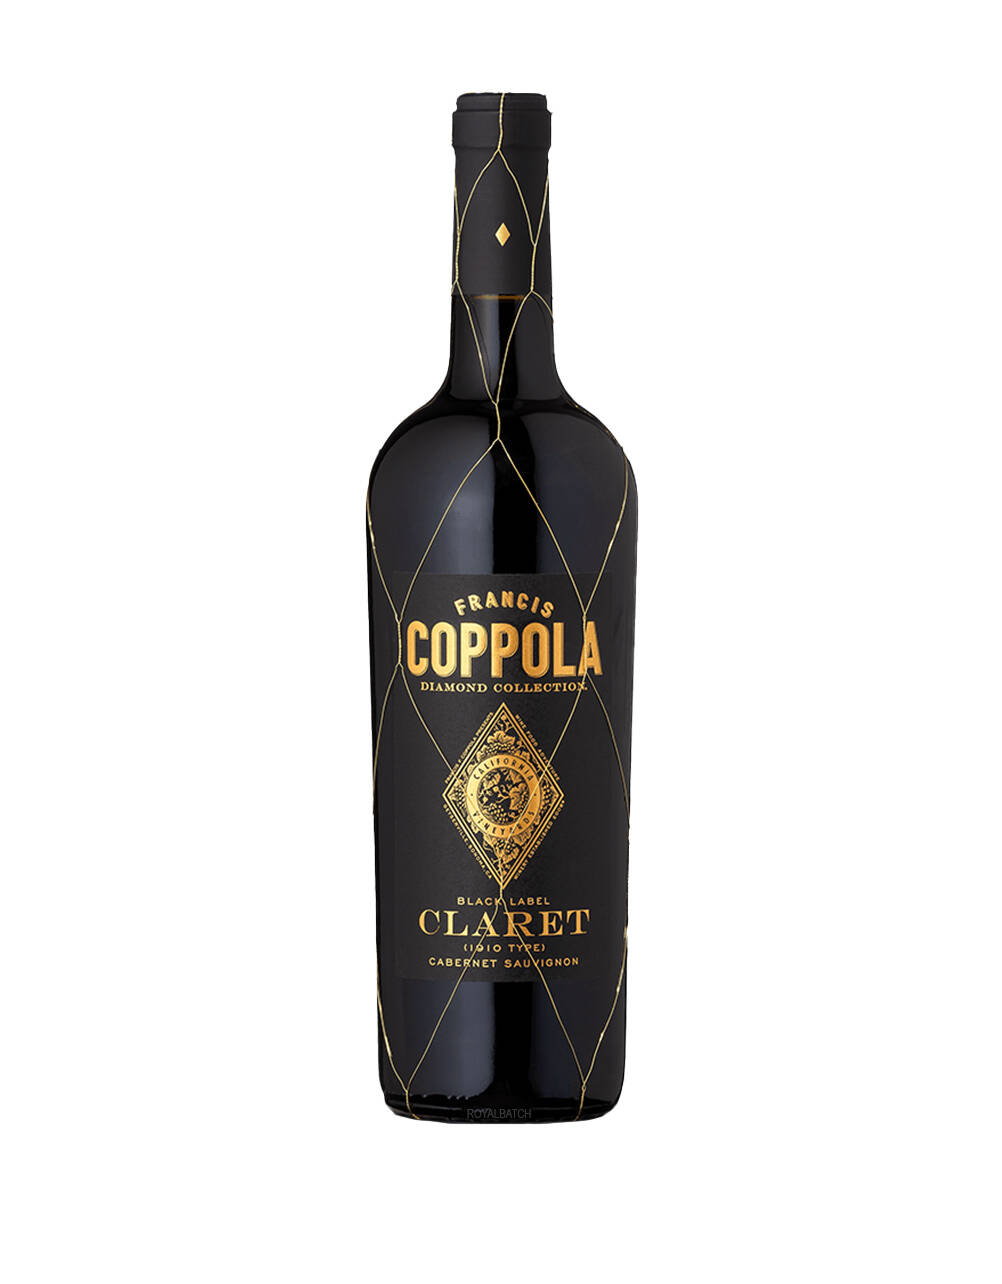 Francis Coppola Diamond Collection Black Label Claret Cabernet Sauvignon 2021